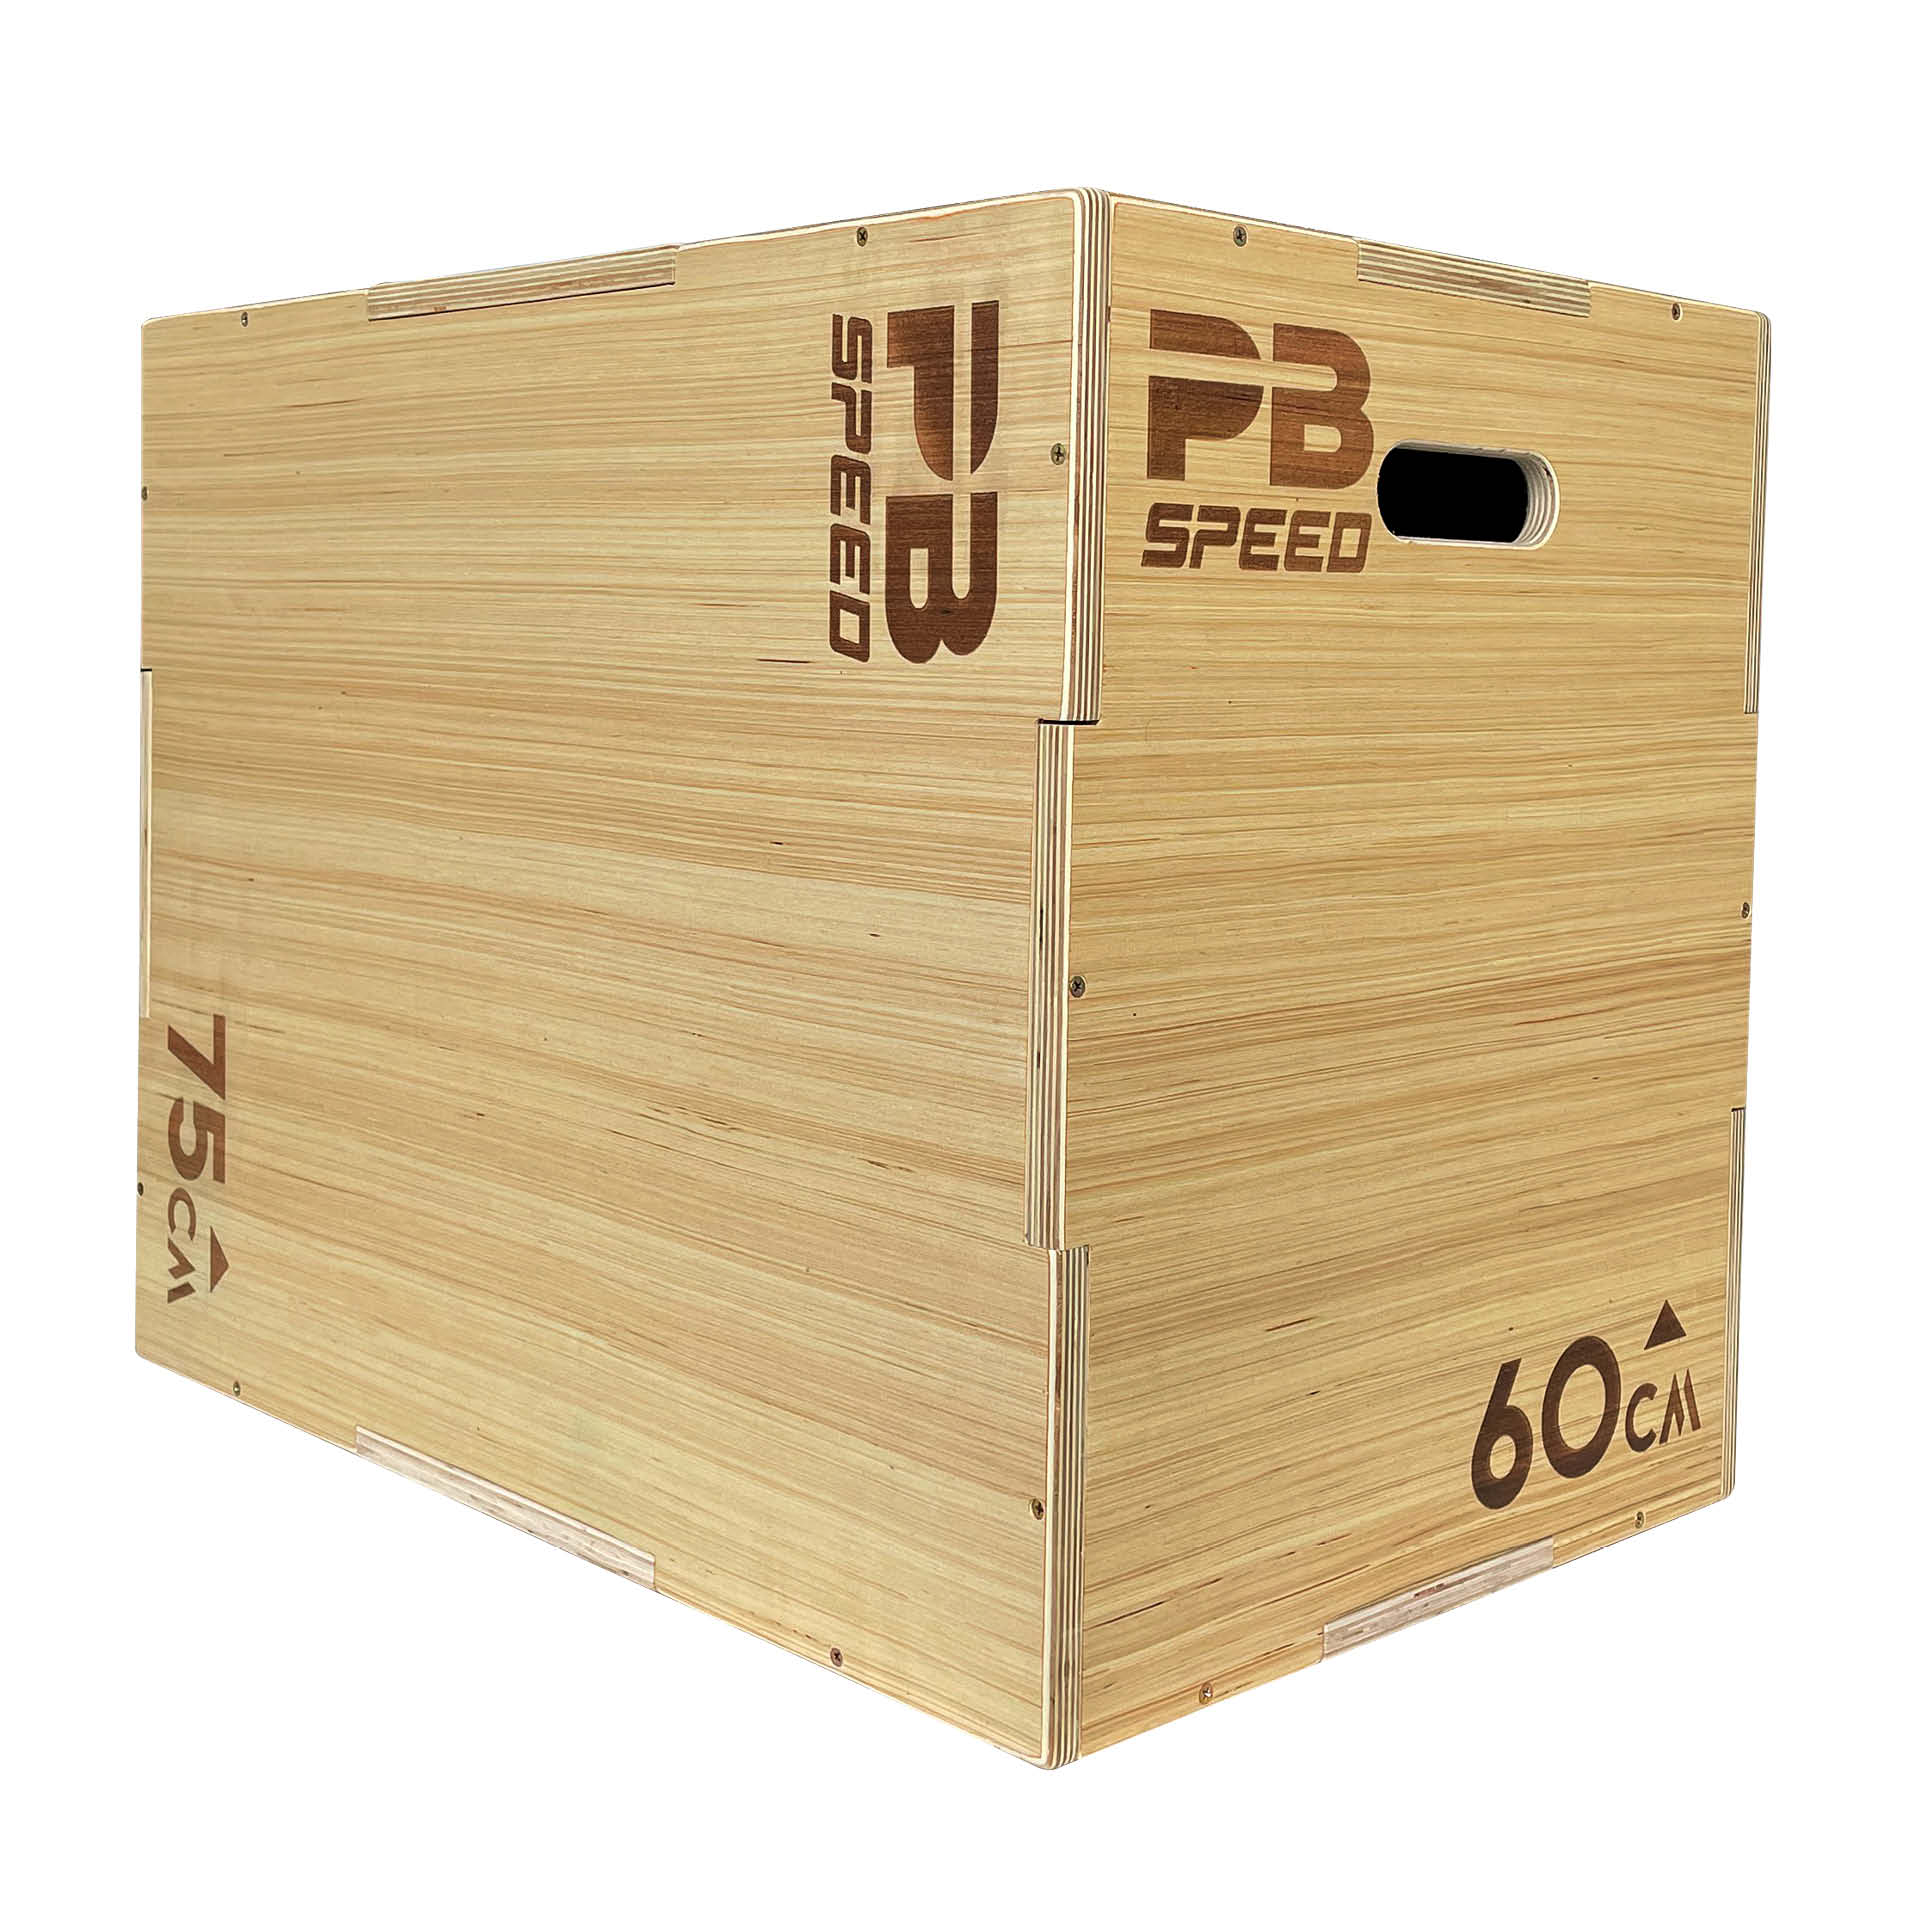 PB Speed Wooden Plyo Box